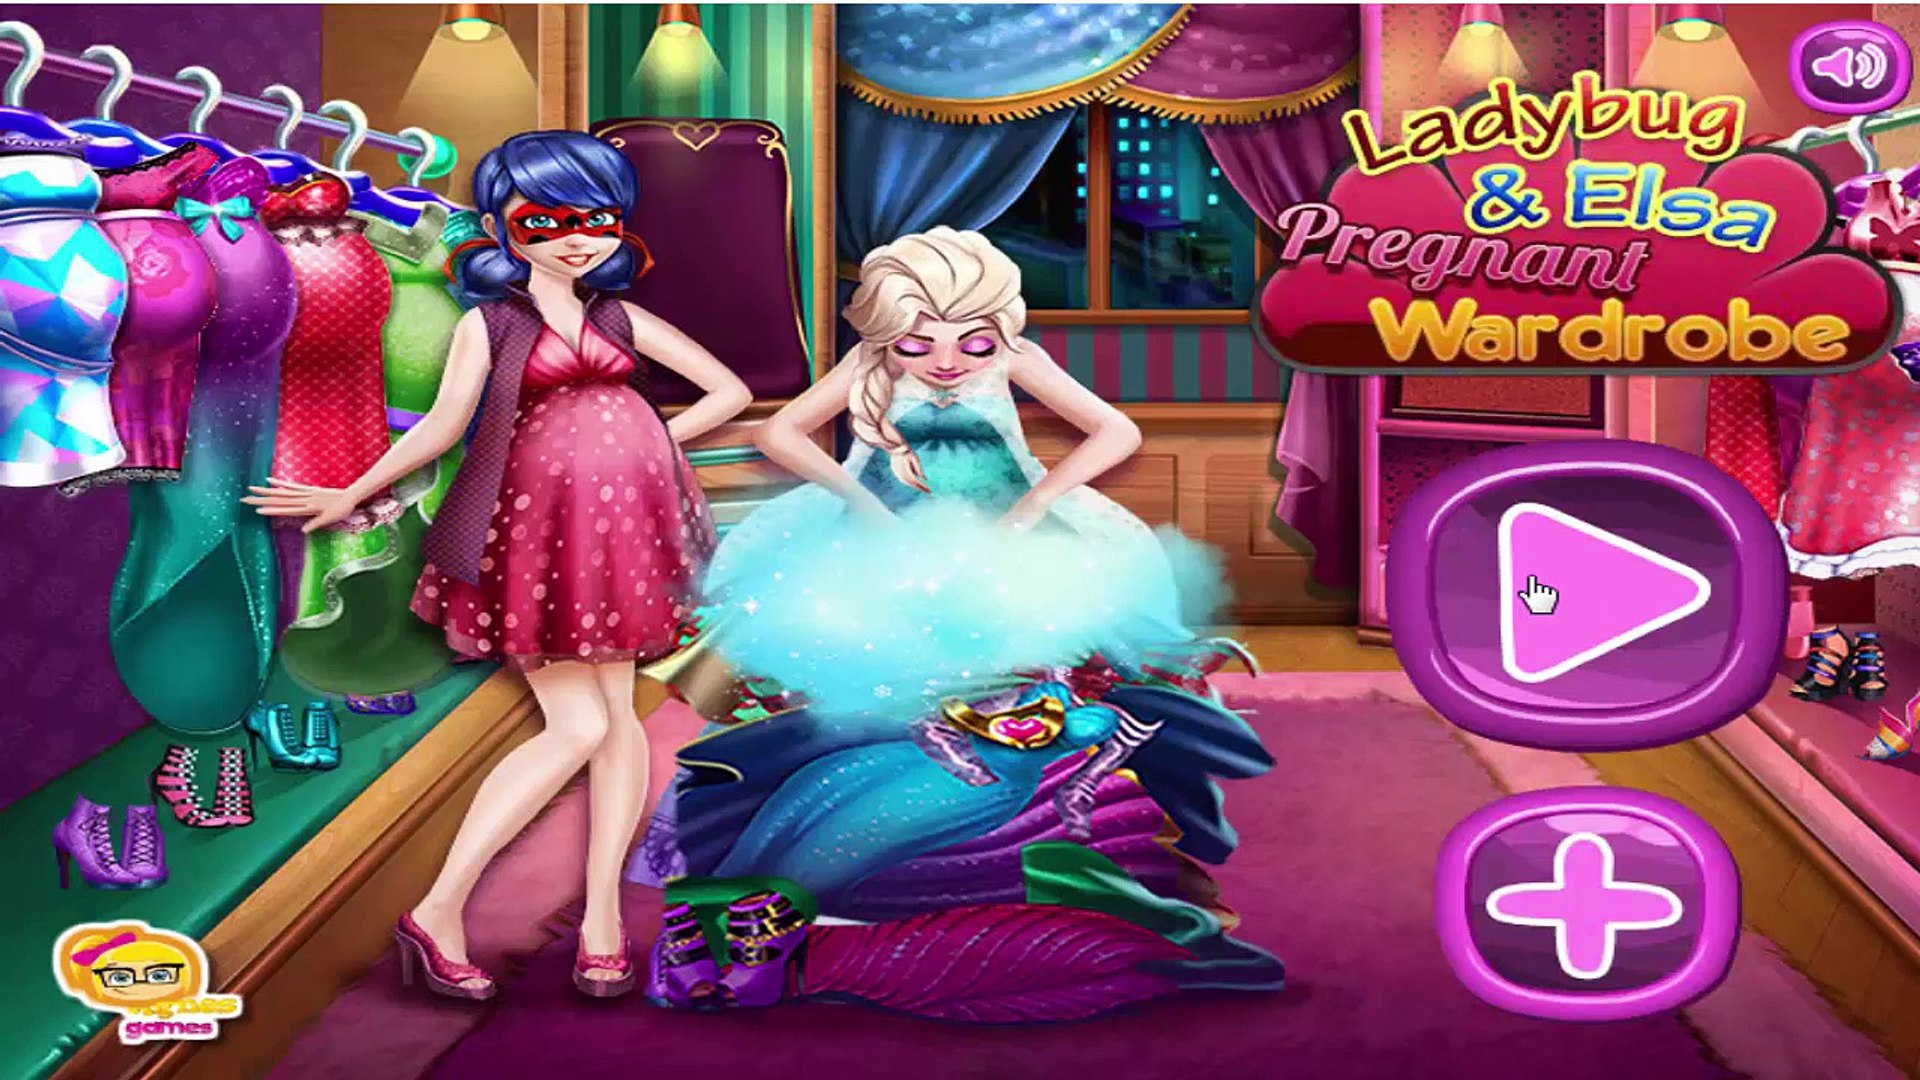 Ladybug And Frozen Elsa Pregnant Wardrobe - Ladybug And Elsa Games For Girls